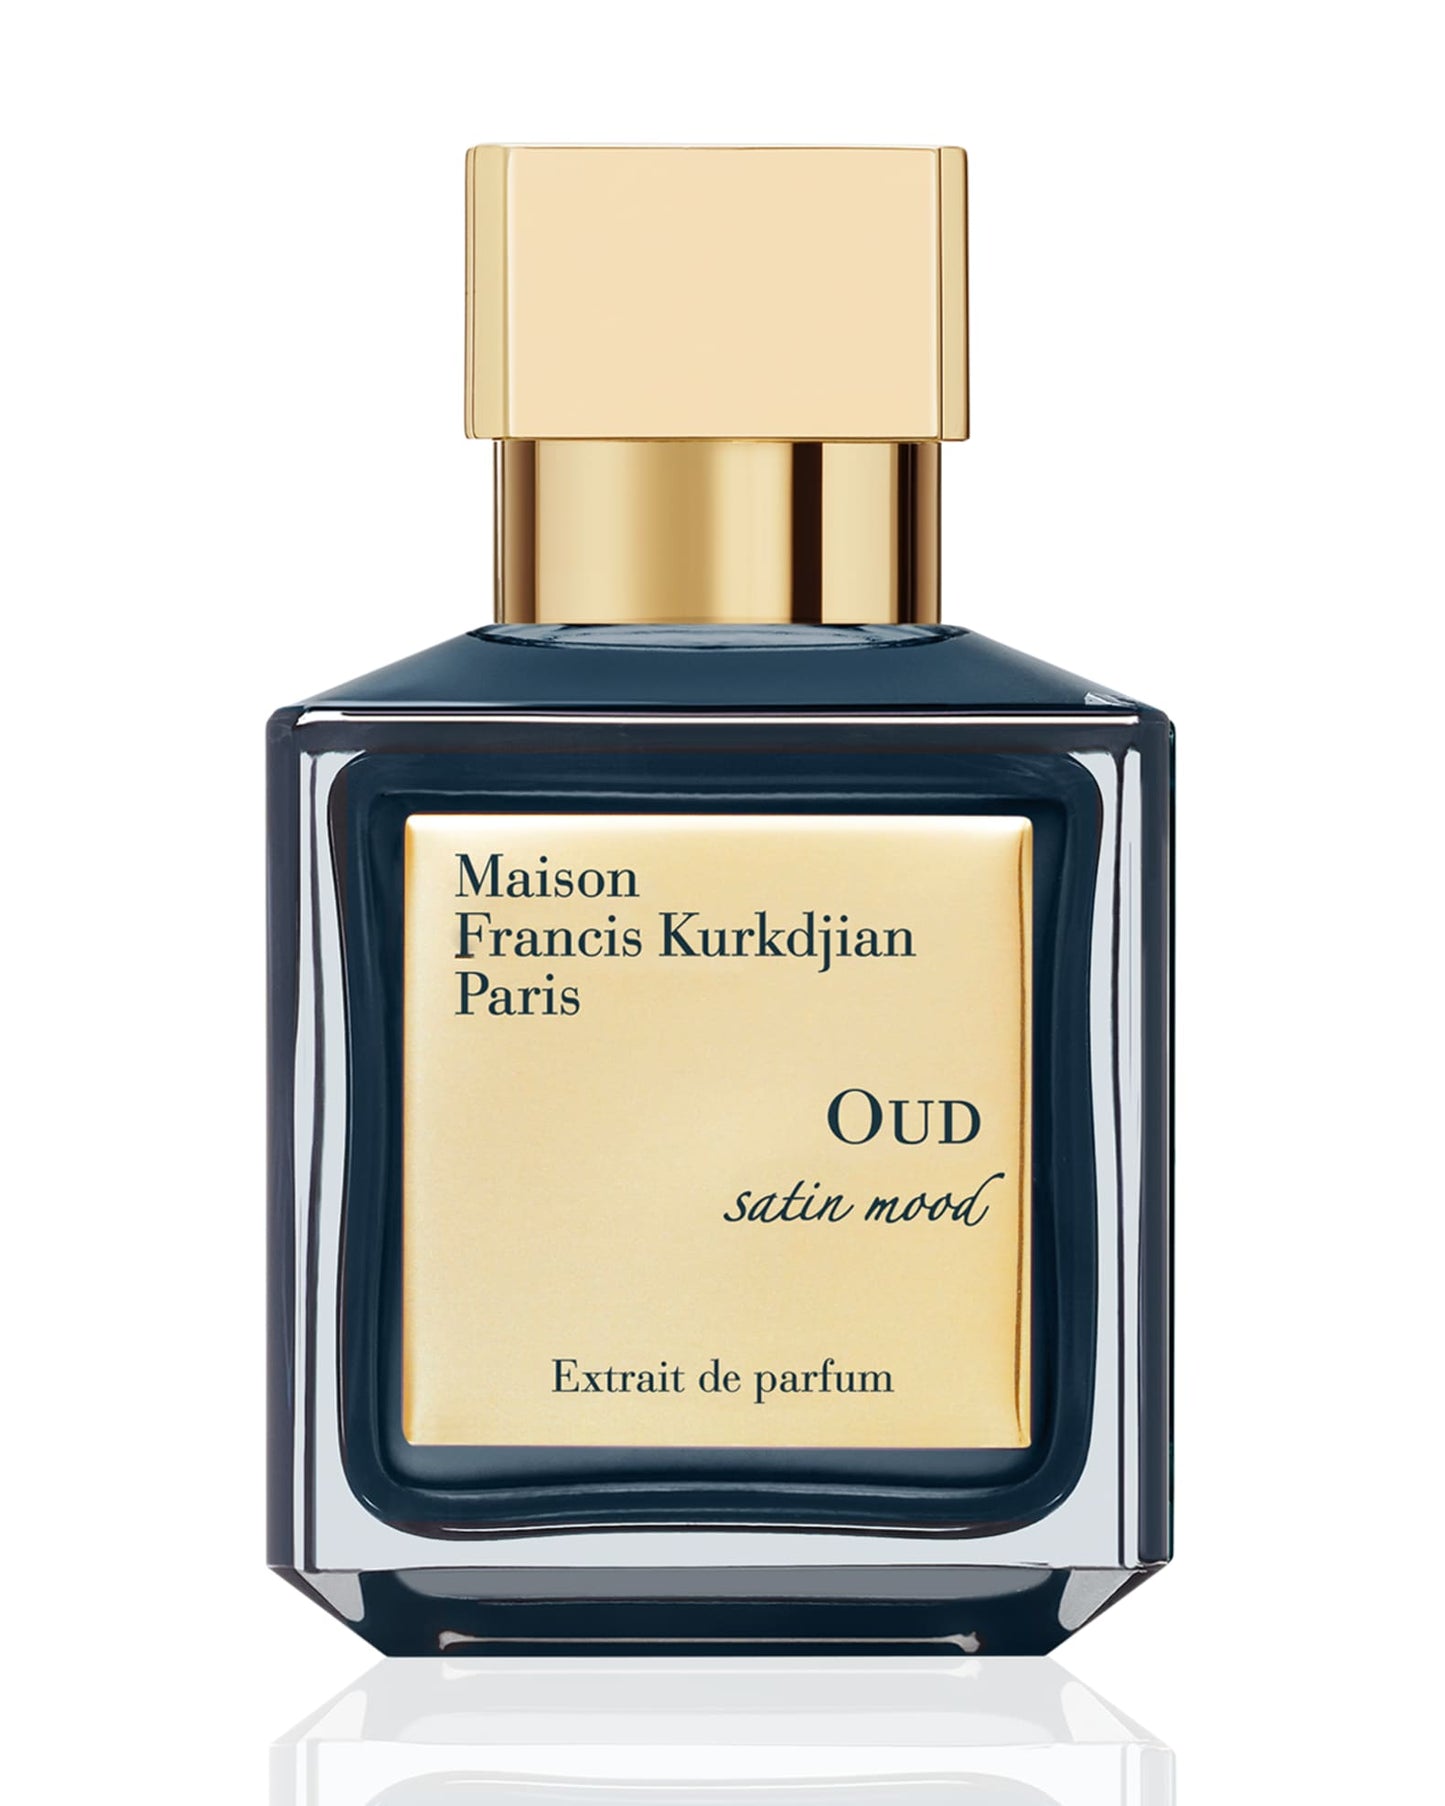 MAISON FRANCIS KURKDJIAN OUD satin mood Extrait de Parfum